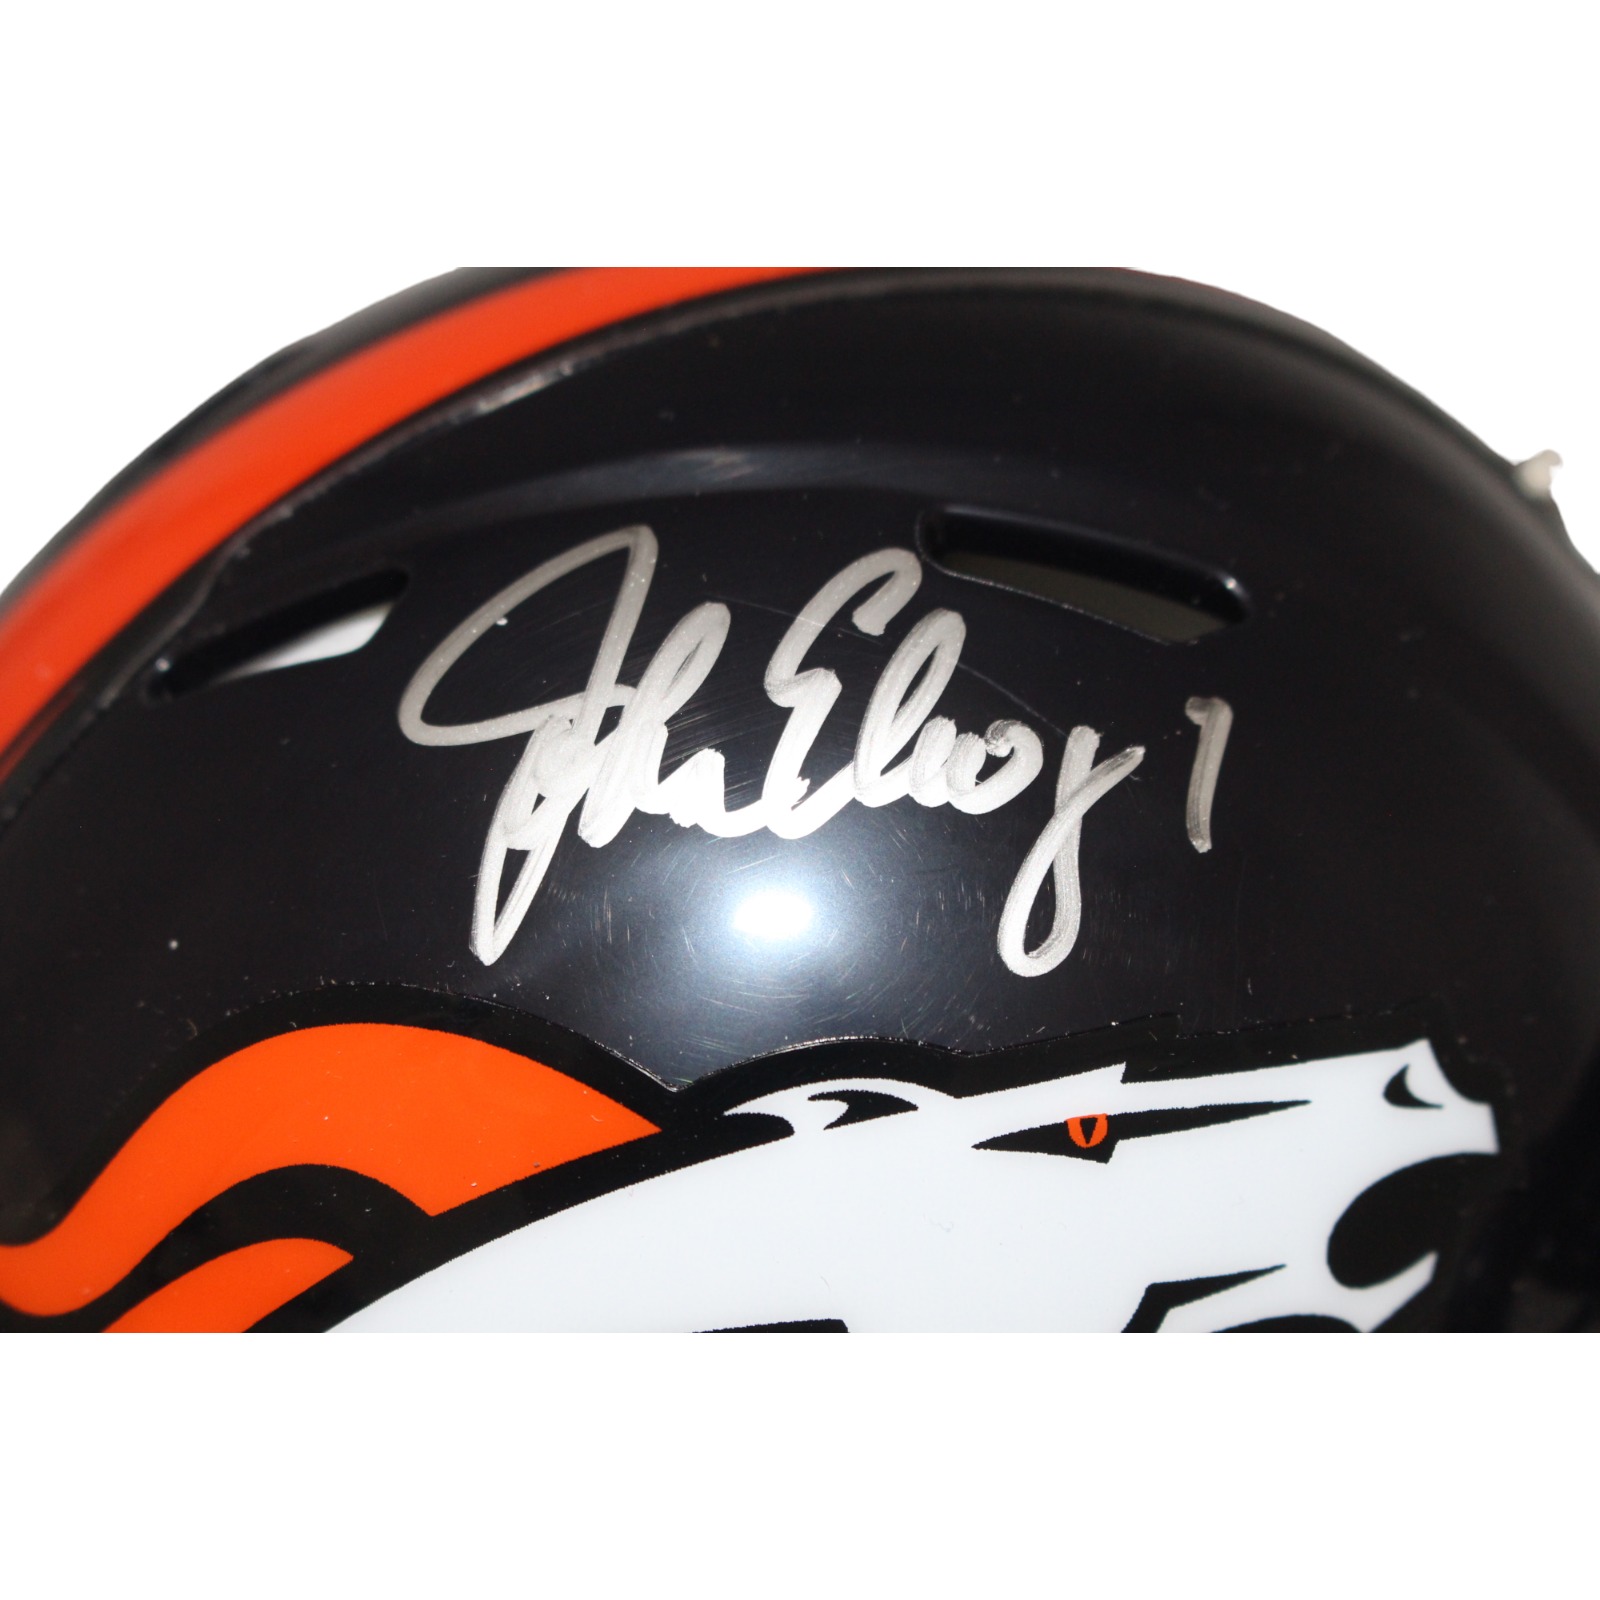 John Elway Autographed/SIgned Denver Broncos Mini Helmet BAS